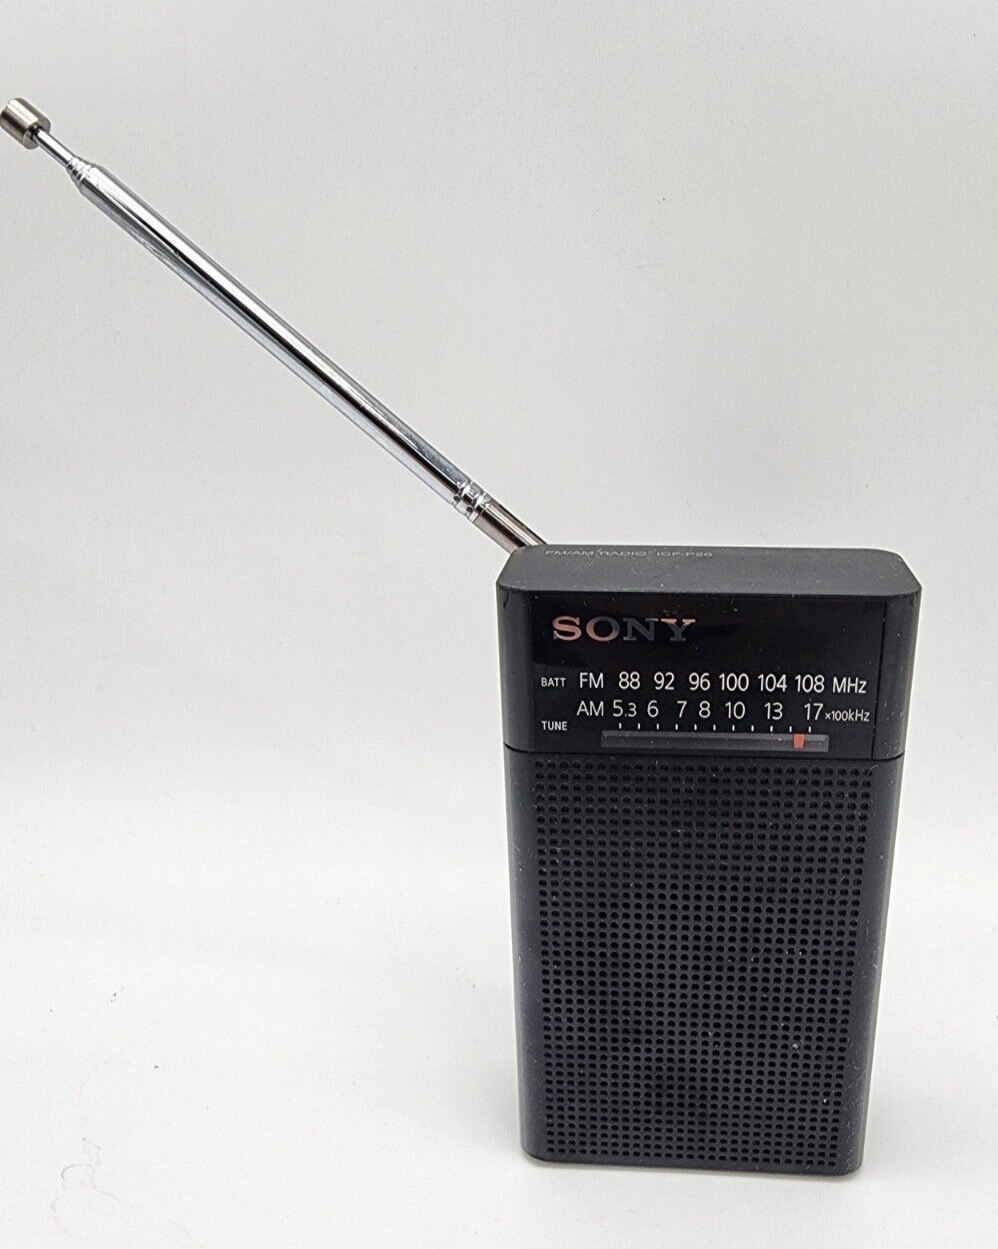 Vtg Sony ICF-P26 Portable Pocket FM/AM Radio Built-in Speaker, Black, Tested 🎵